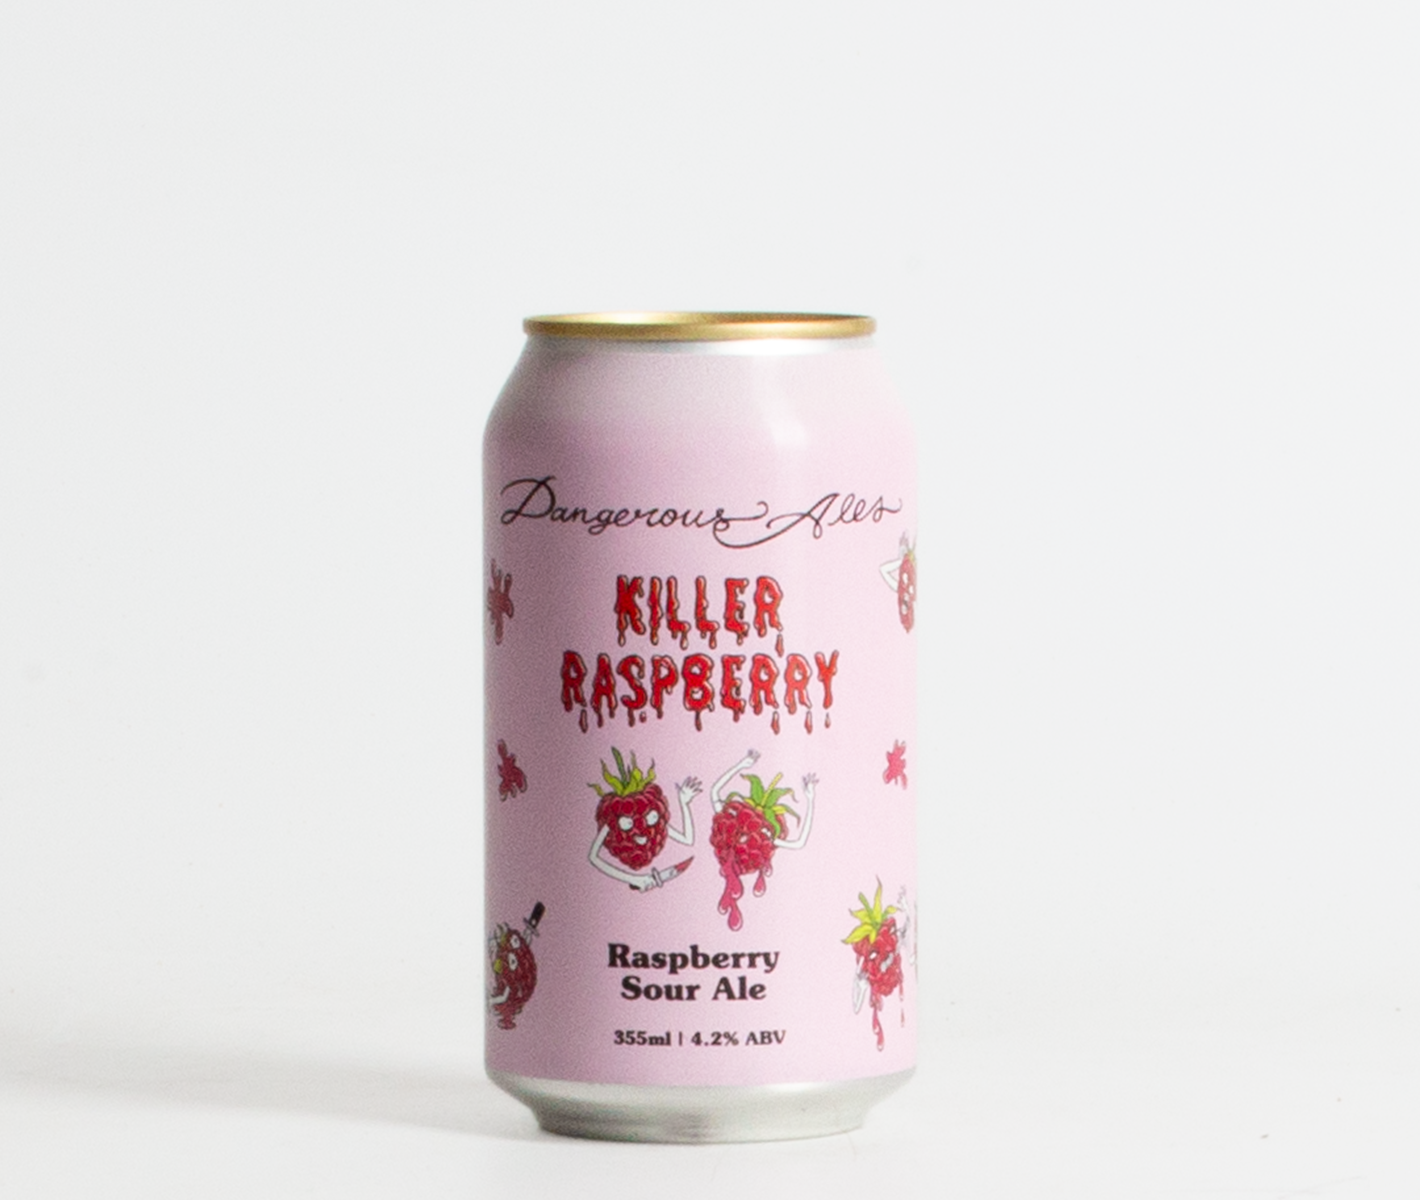 Killer Raspberry Sour Ale (355ml)